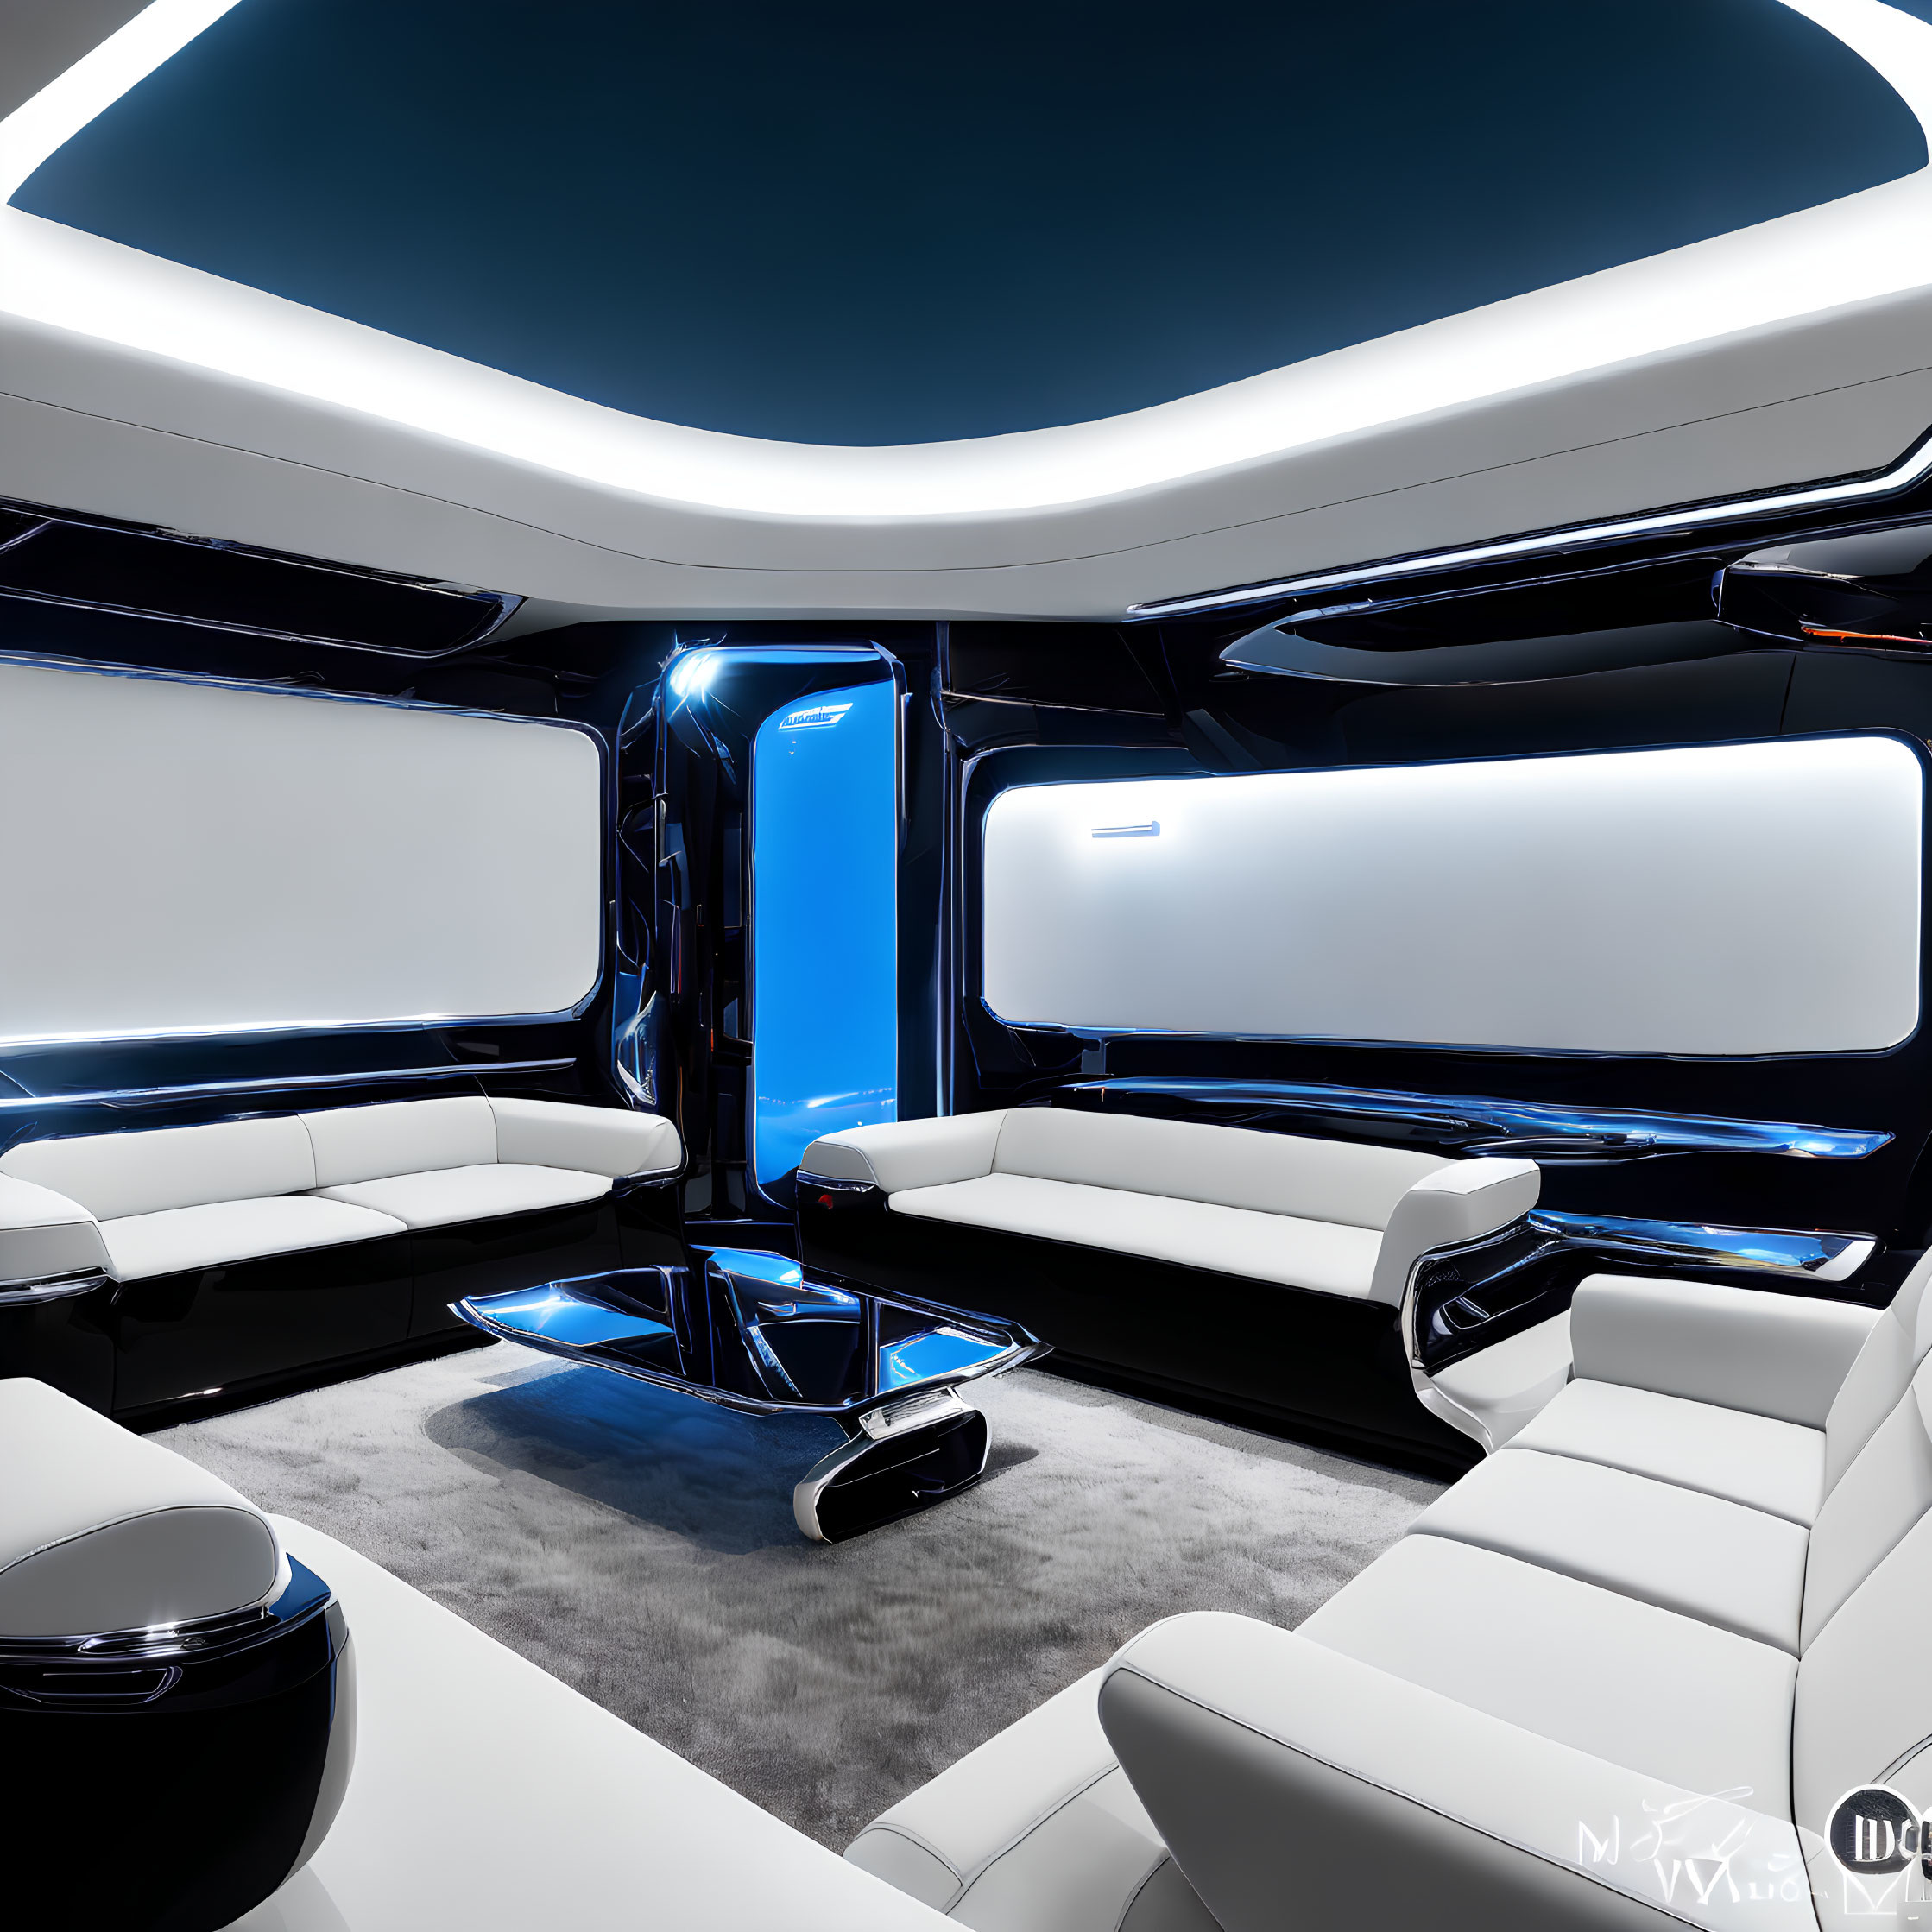 Futuristic Vehicle Interior: White Leather, Black Surfaces, Blue Lighting